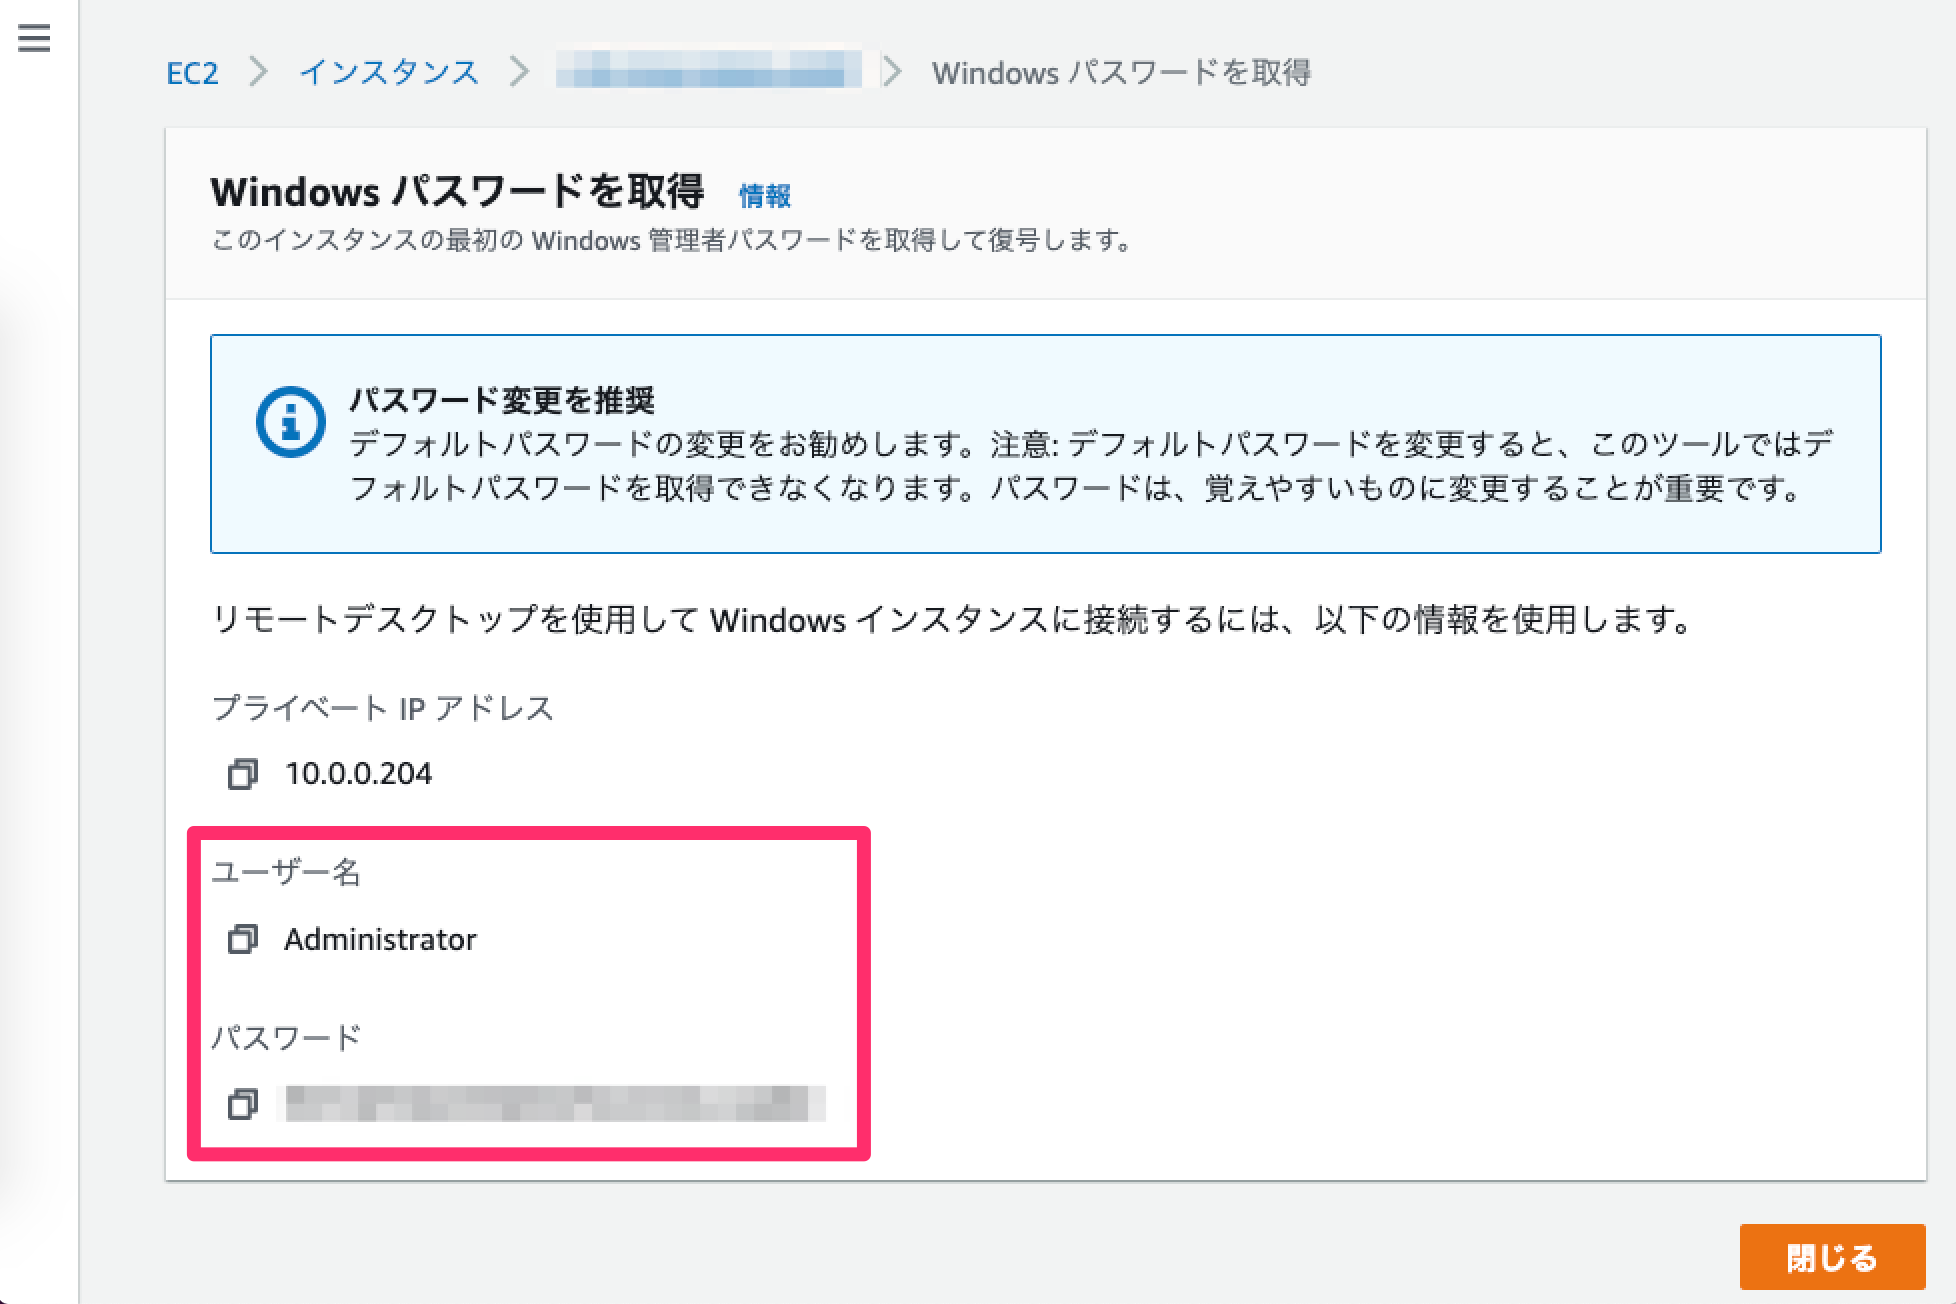 Windows_パスワードを取得___EC2_Management_Console-2_png.png